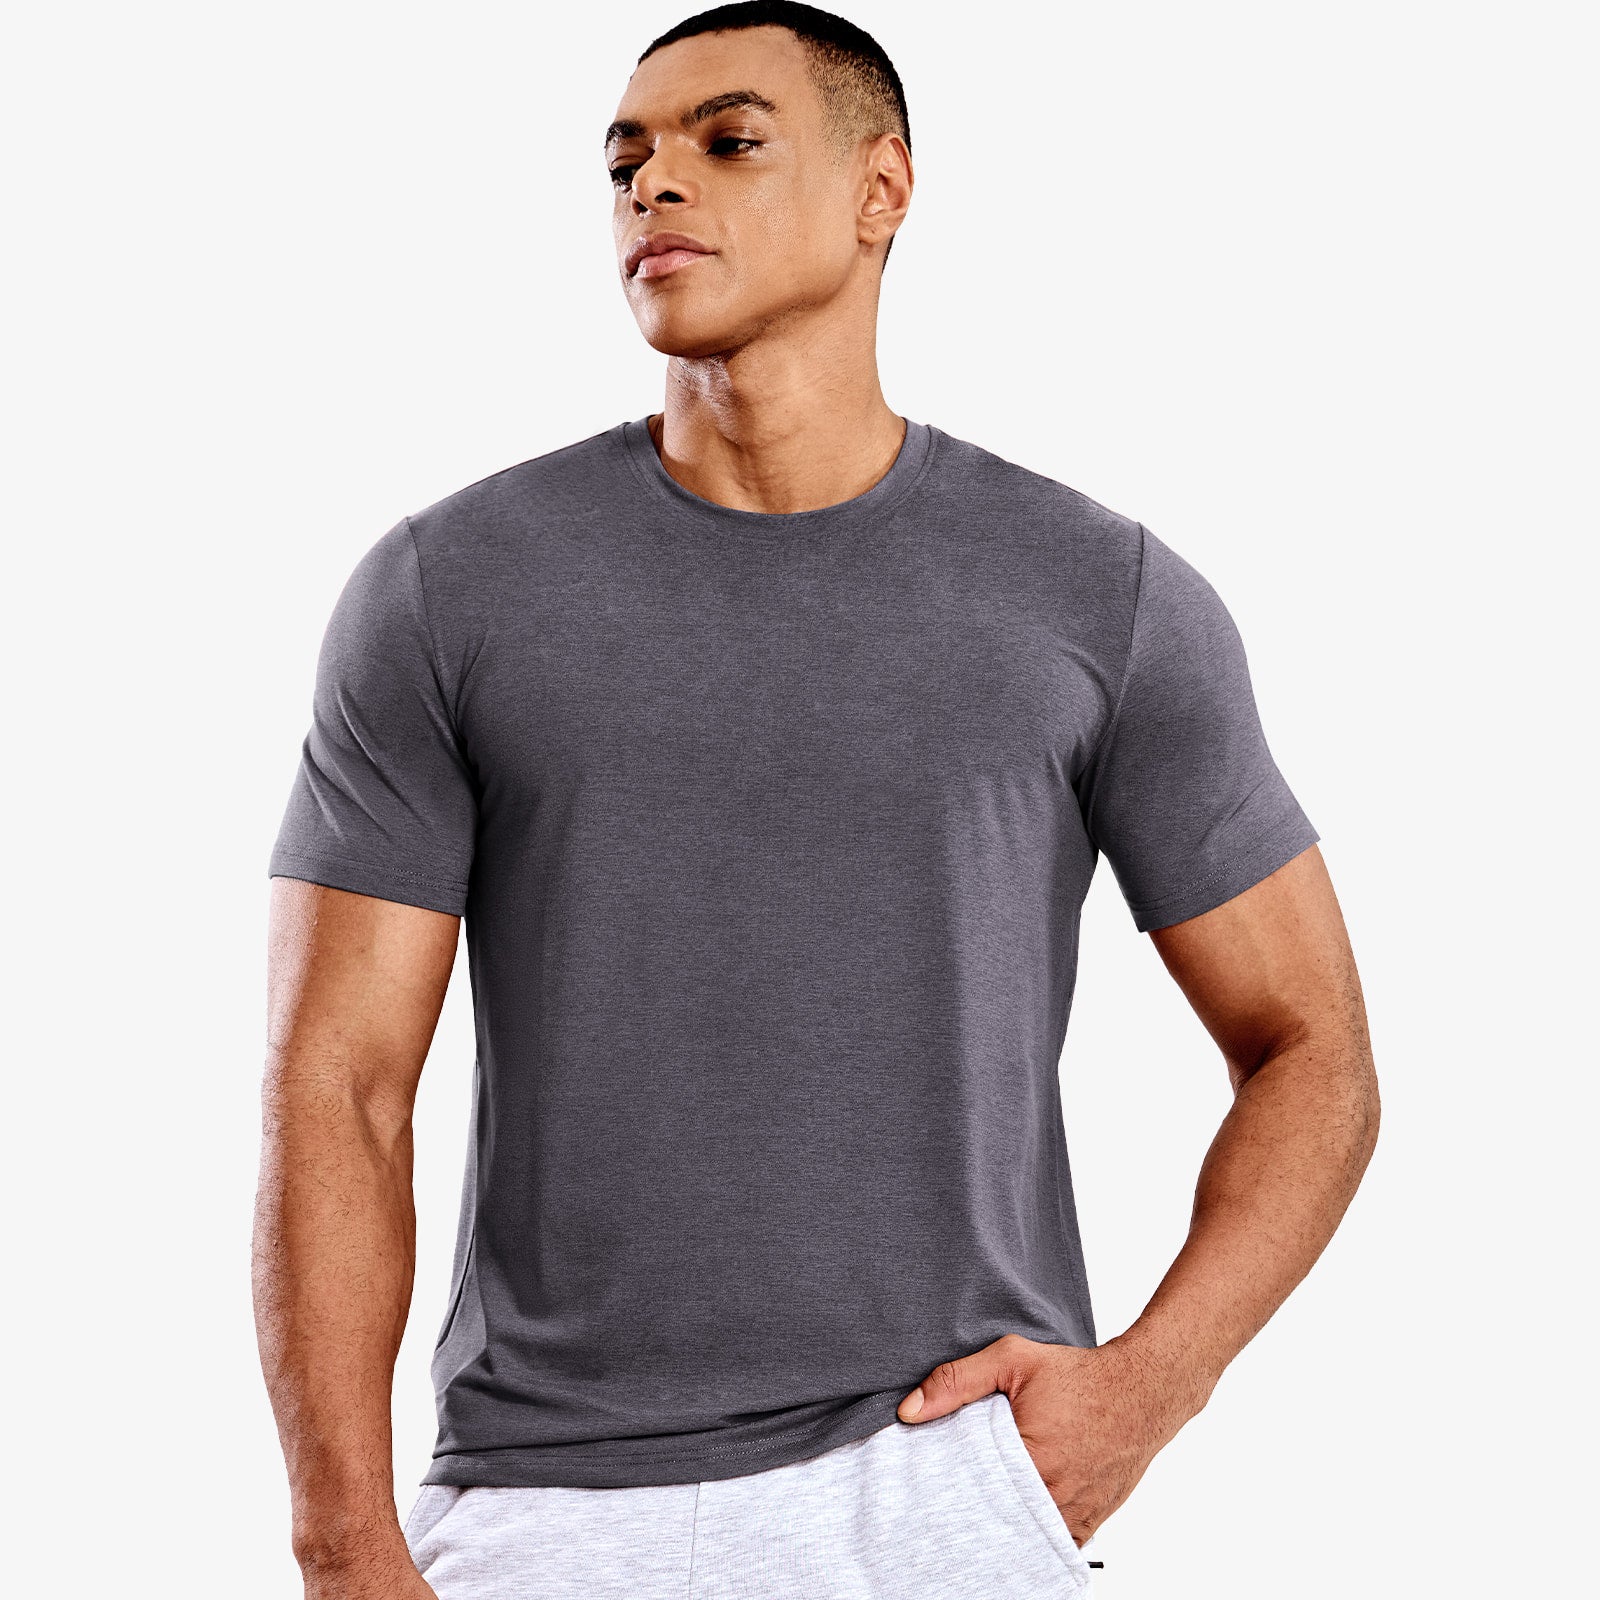 Men's T Shirts Short Sleeve Dry Fit Soft Athletic Tshirt